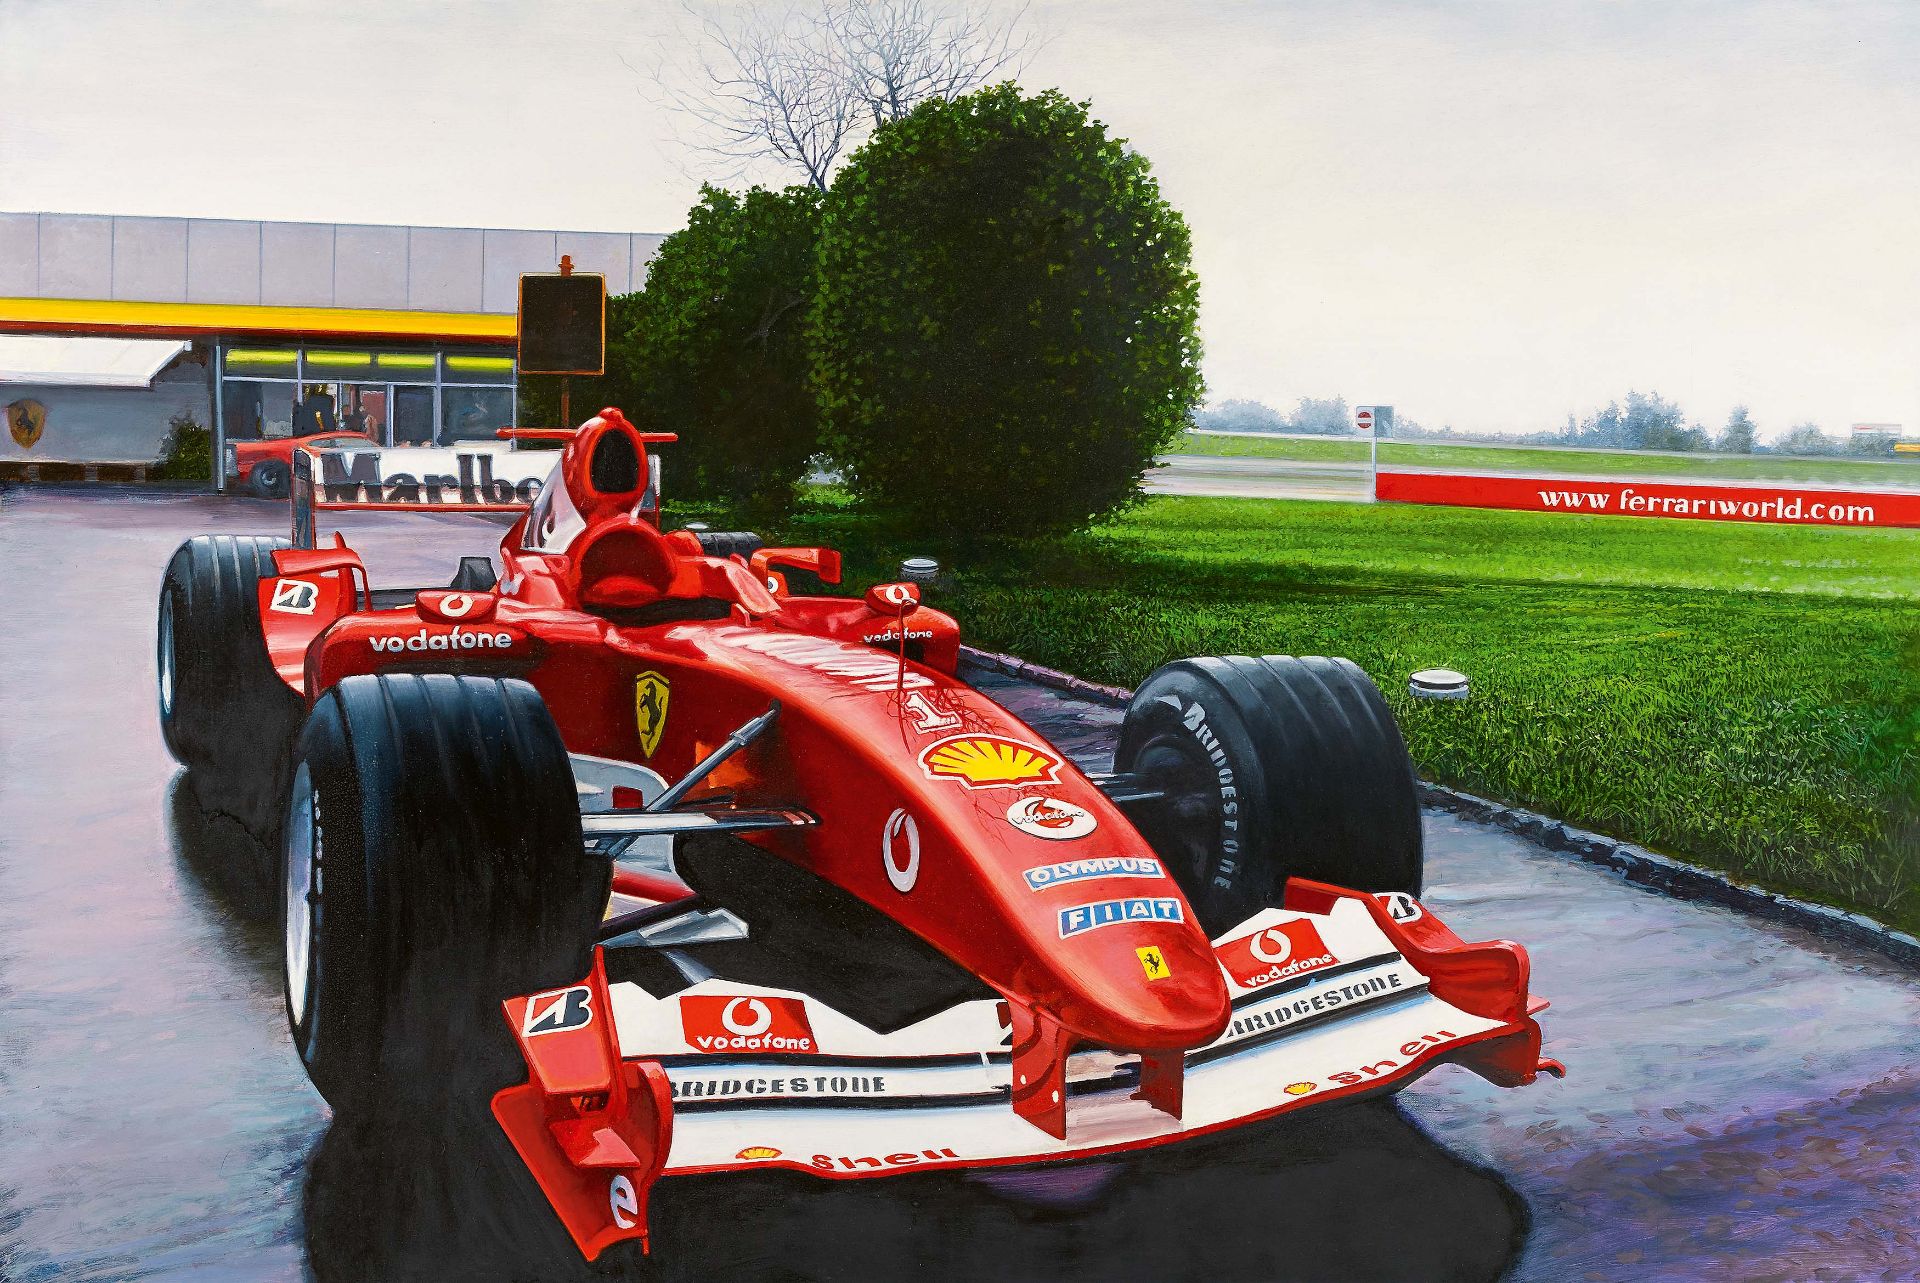 Blackwell, Tom1938 Chicago - 2020 Rhinebeck, NY/USA"Ferrariworld, Fall". 2006. Oil on canvas. 102